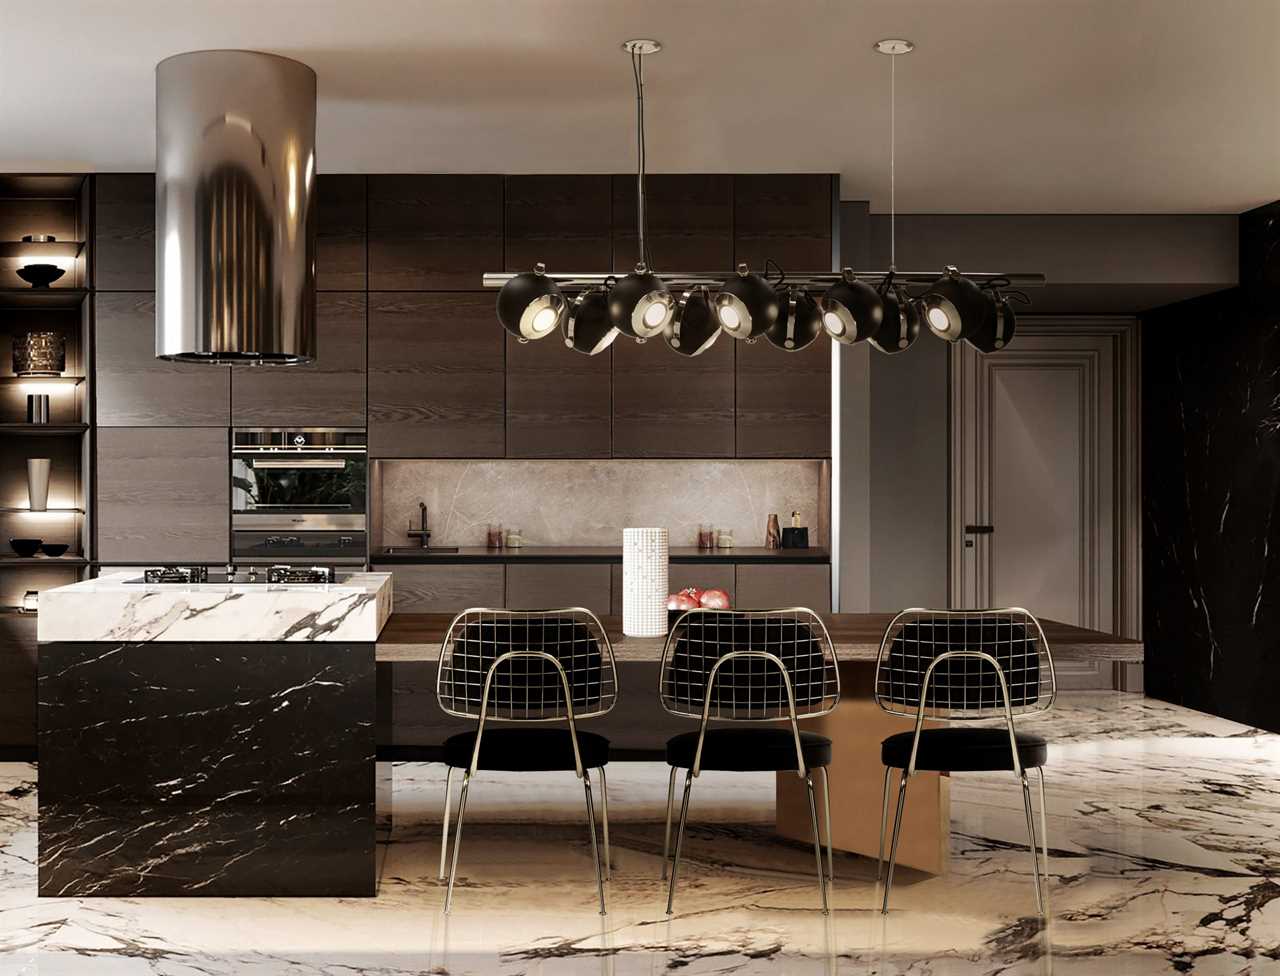 2023 Kitchen Design Ideas For Homes With Statement Range Hoods